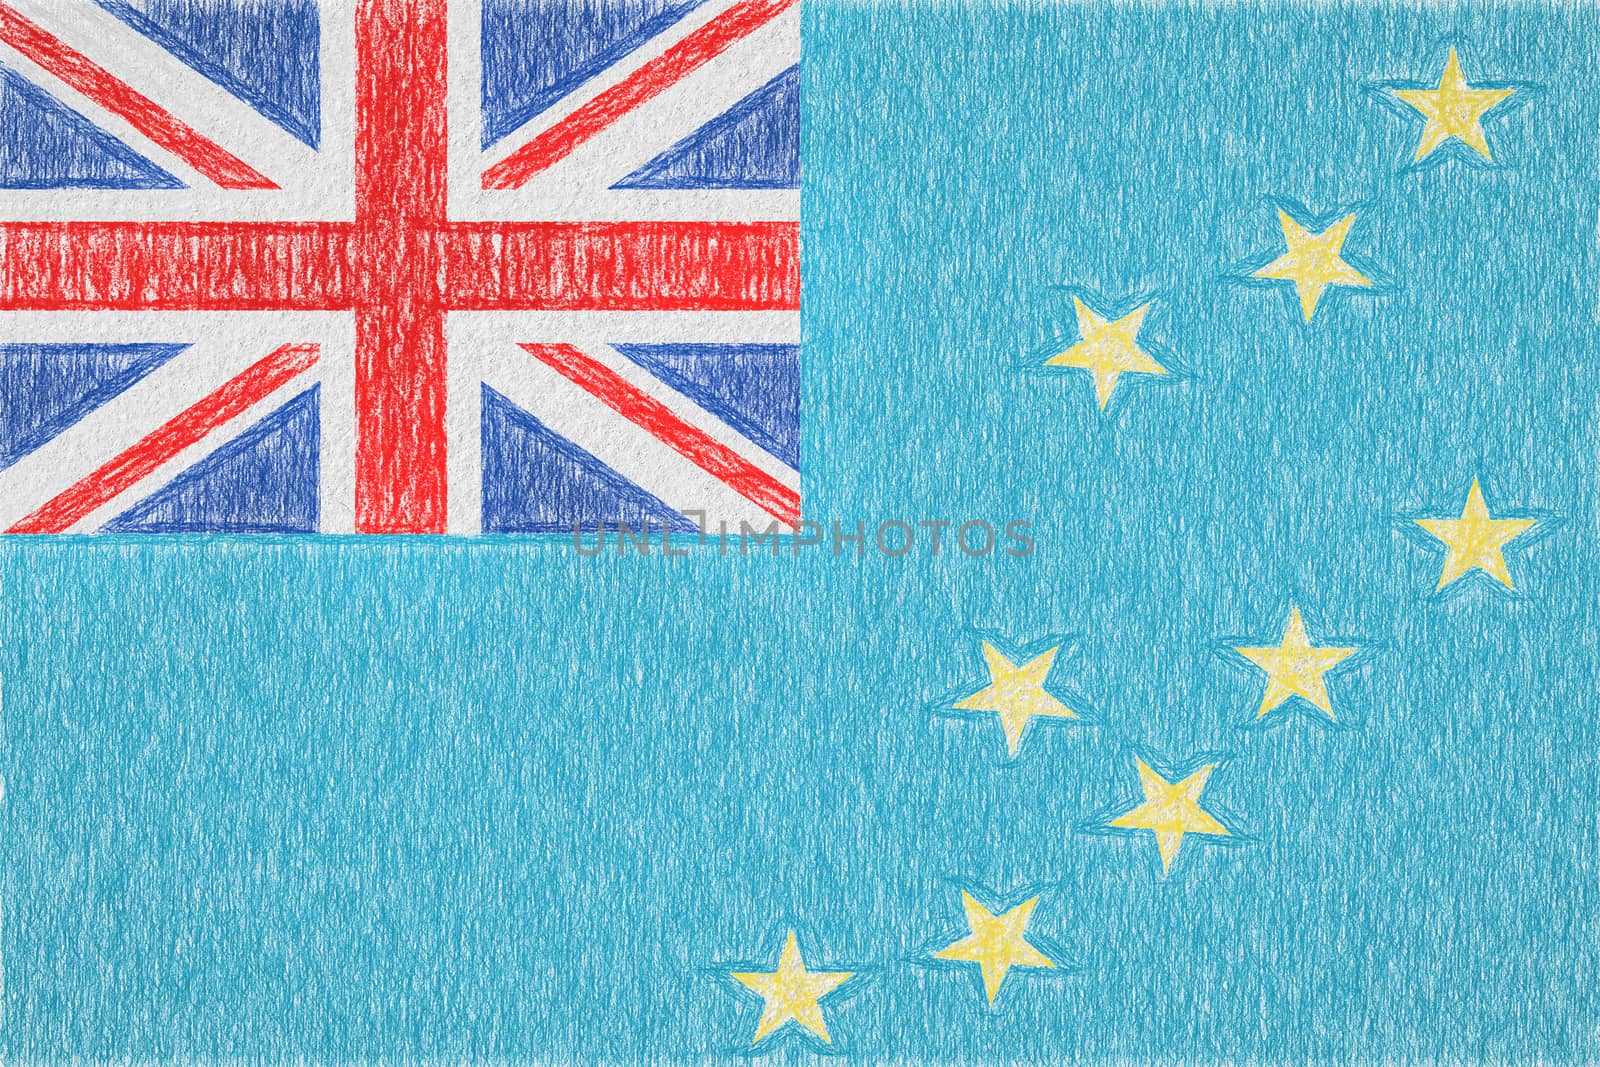 Tuvalu painted flag. Patriotic drawing on paper background. National flag of Tuvalu